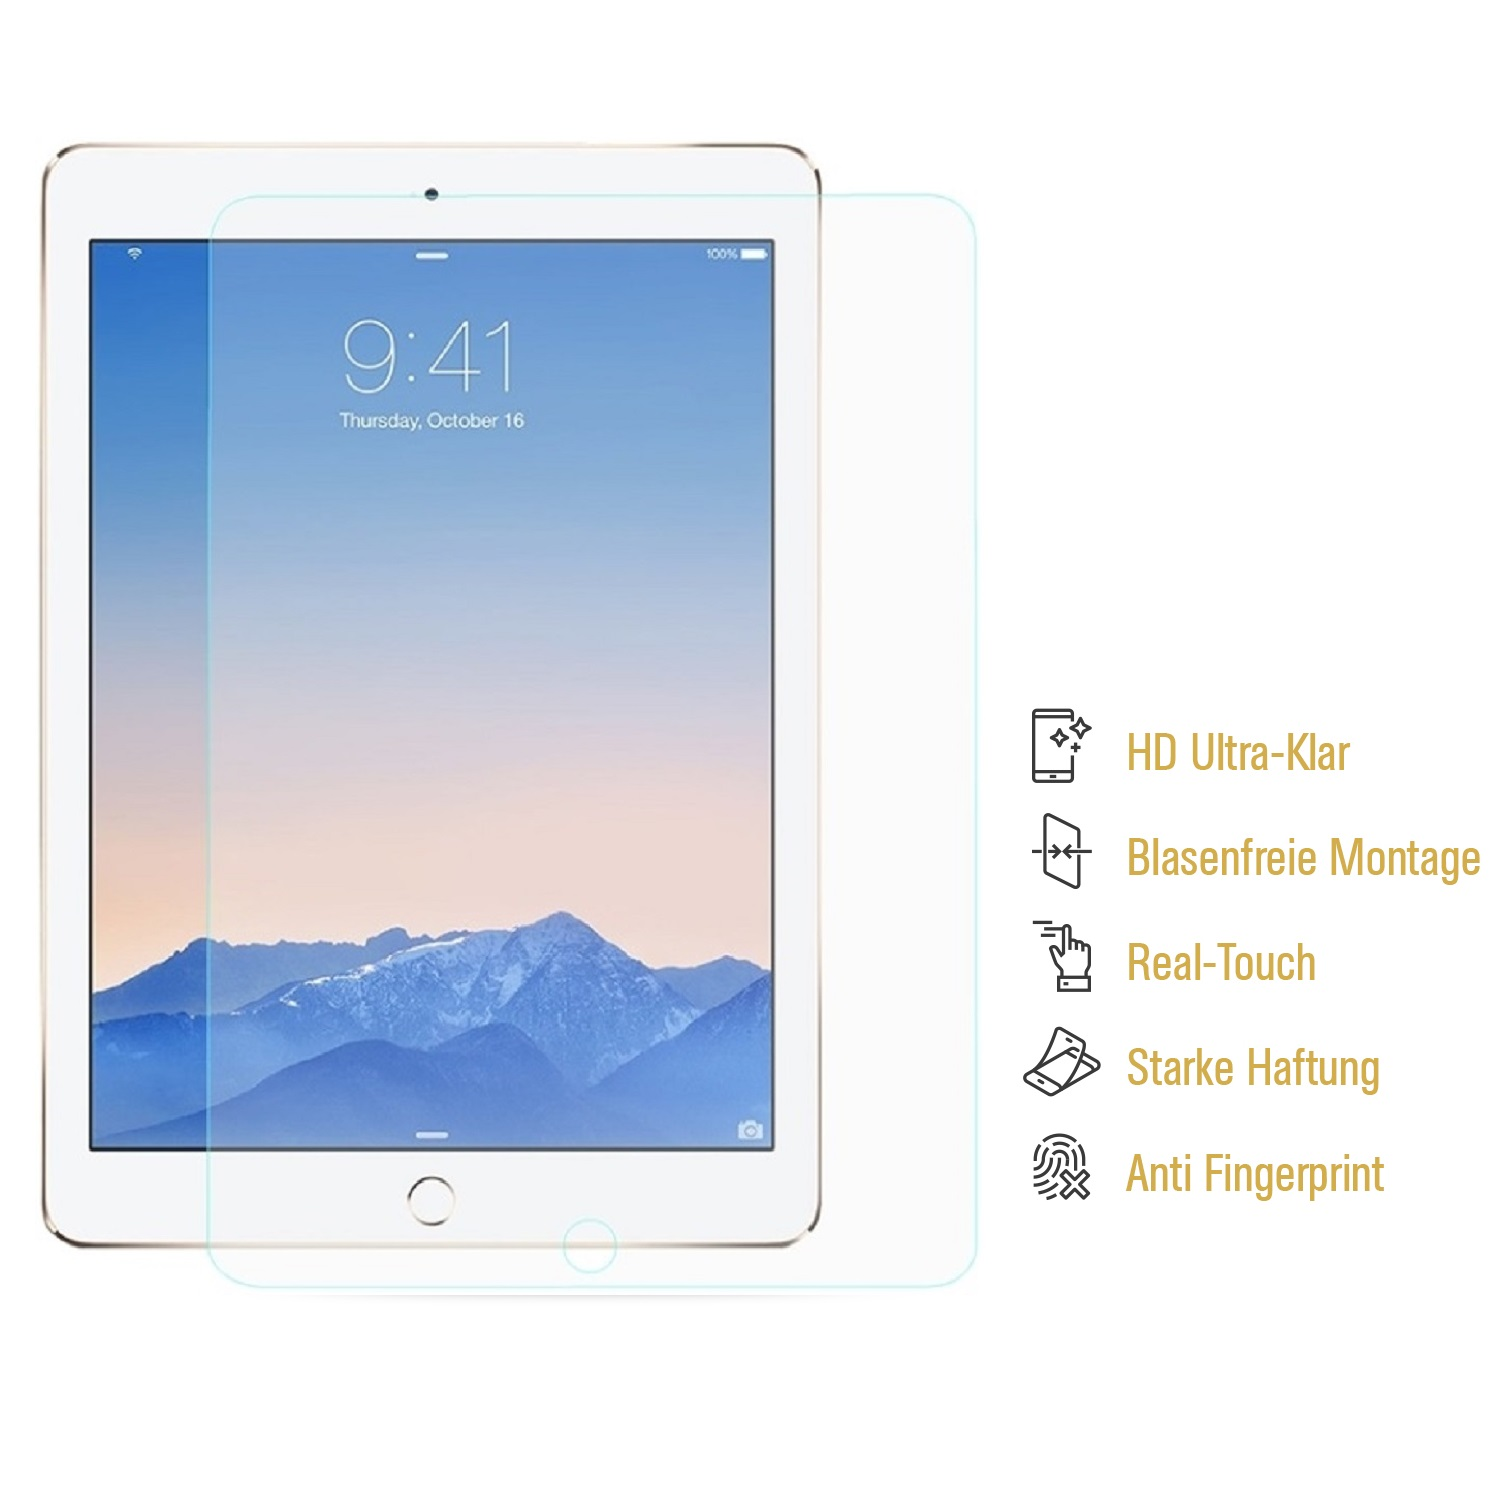 Displayschutzfolie(für PROTECTORKING 9.7) 6x iPad Apple Air Schutzfolie KLAR HD 2